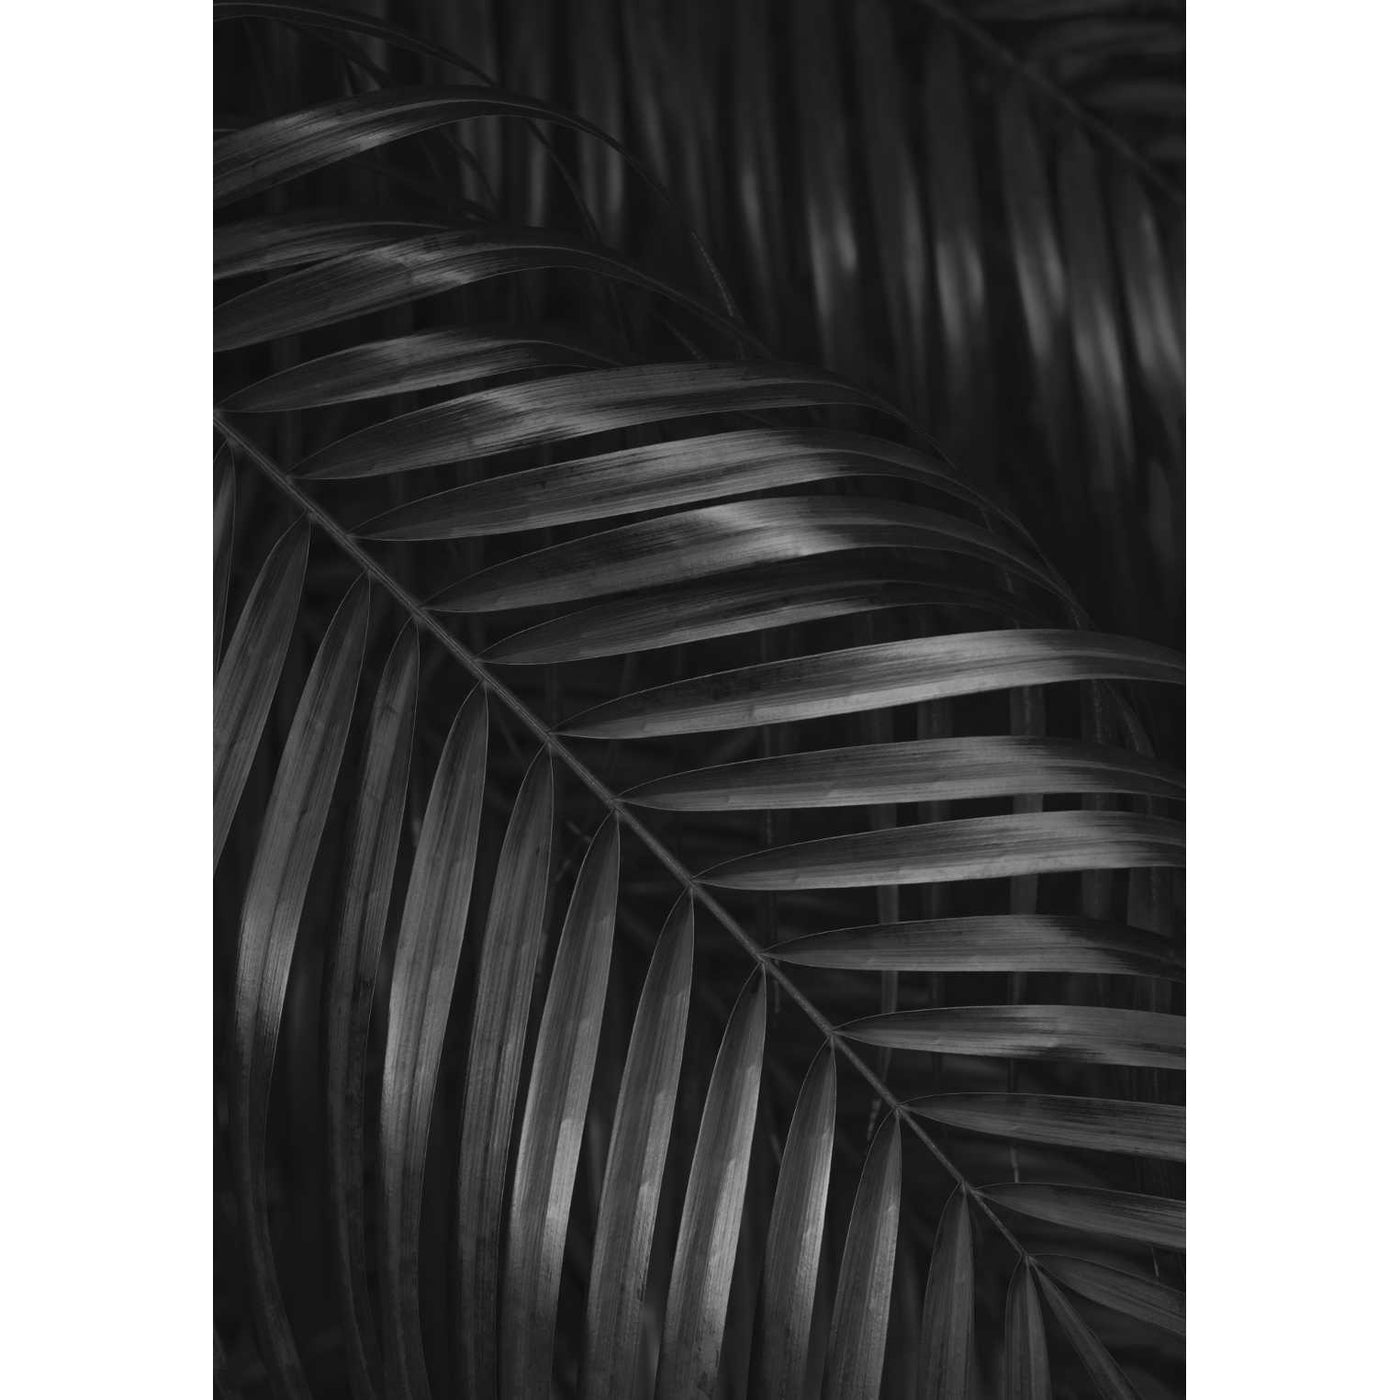 Black & White Palm Leaves III